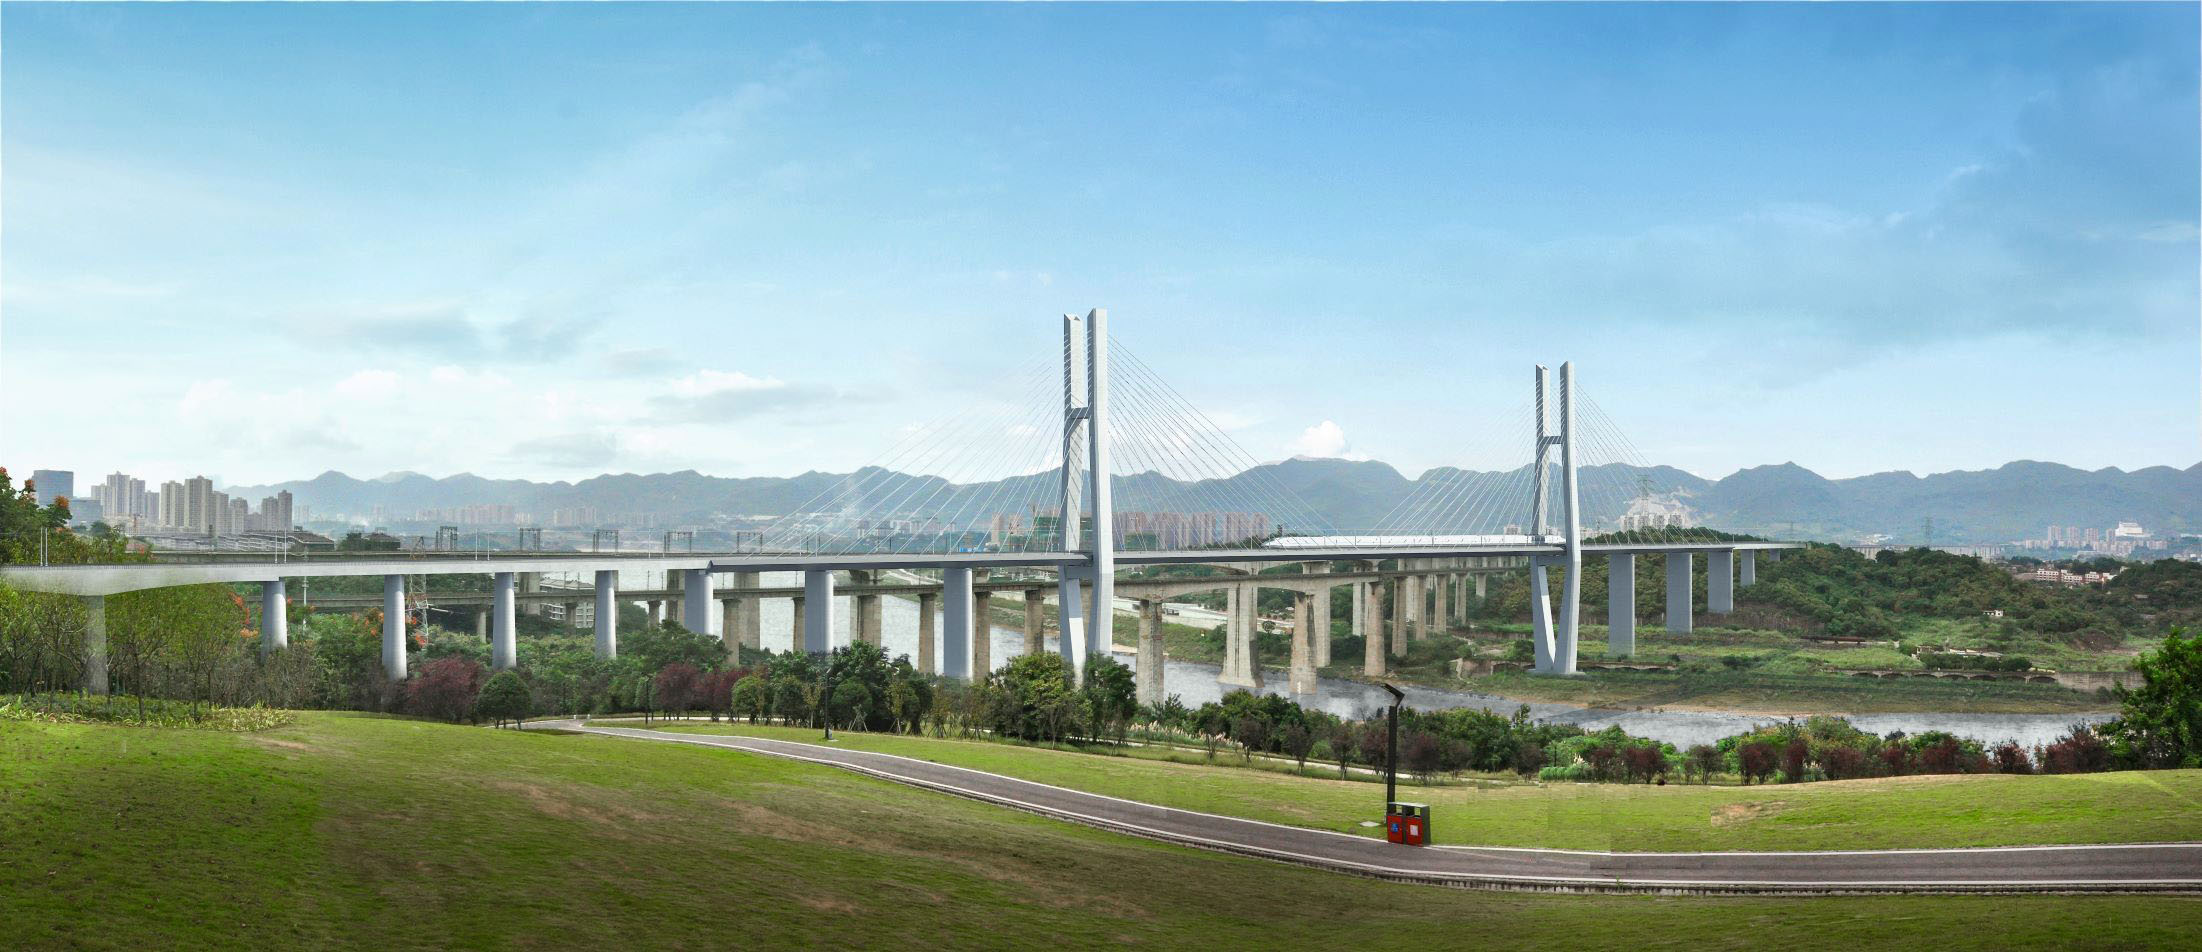 Jinkou Jialing Railway Bridge Chengyu Render2.jpg